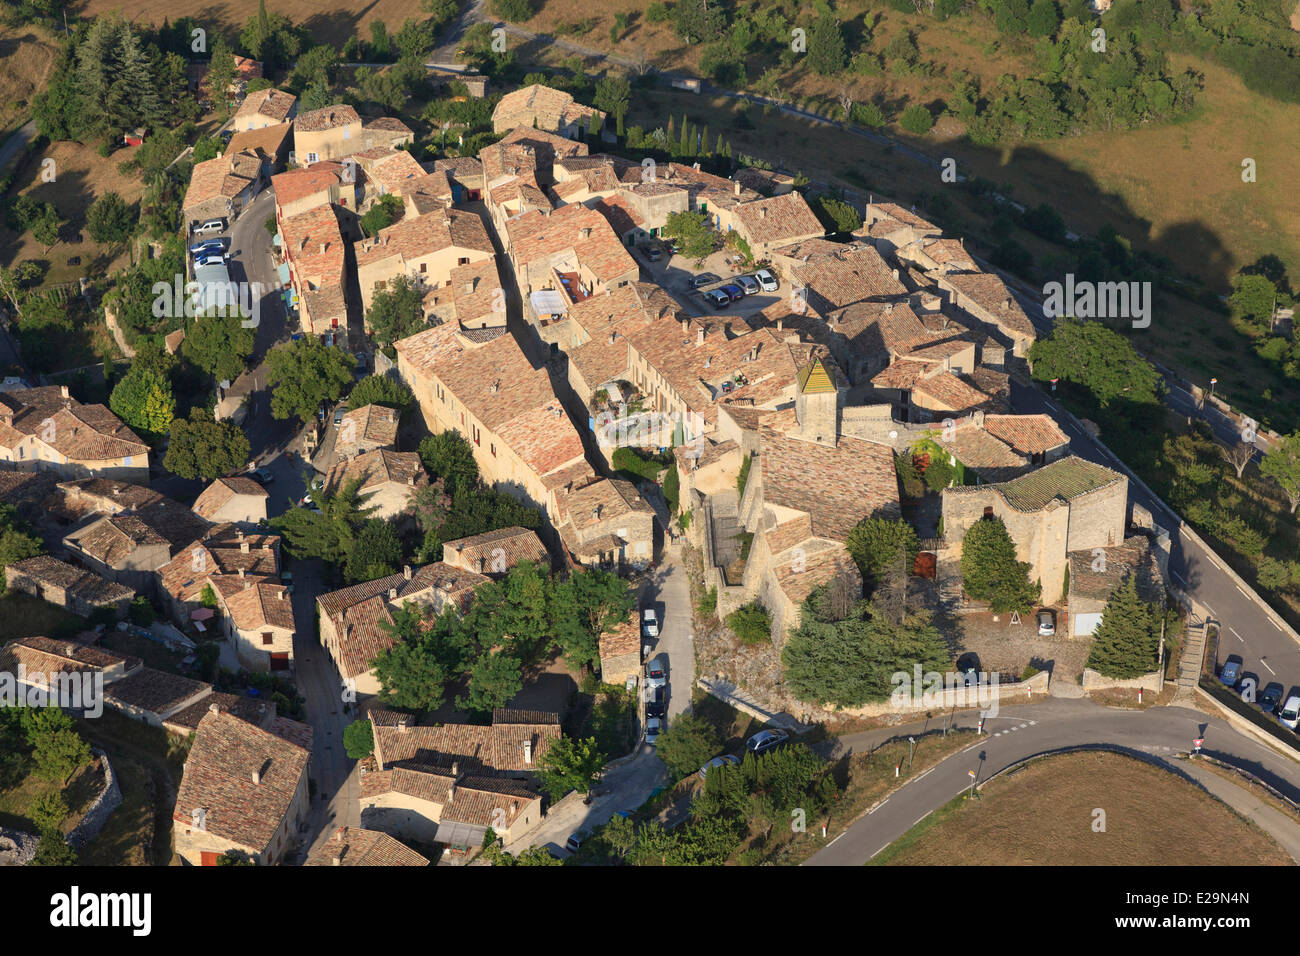 France, Vaucluse, hilltop village of Aurel (aerial view) Stock Photo